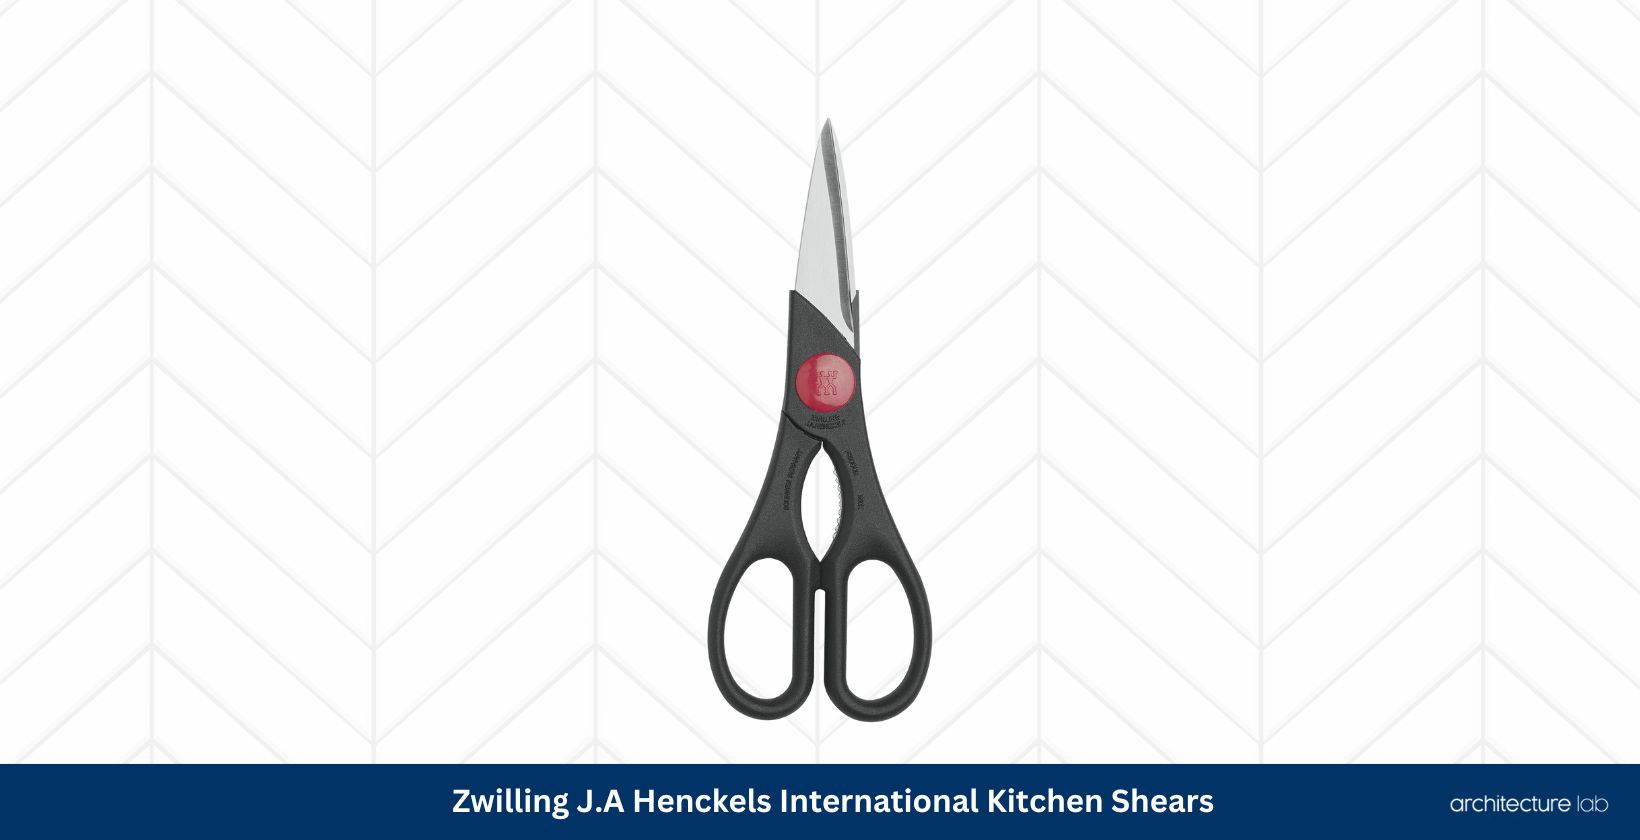 Zwilling j. A henckels international kitchen shears0